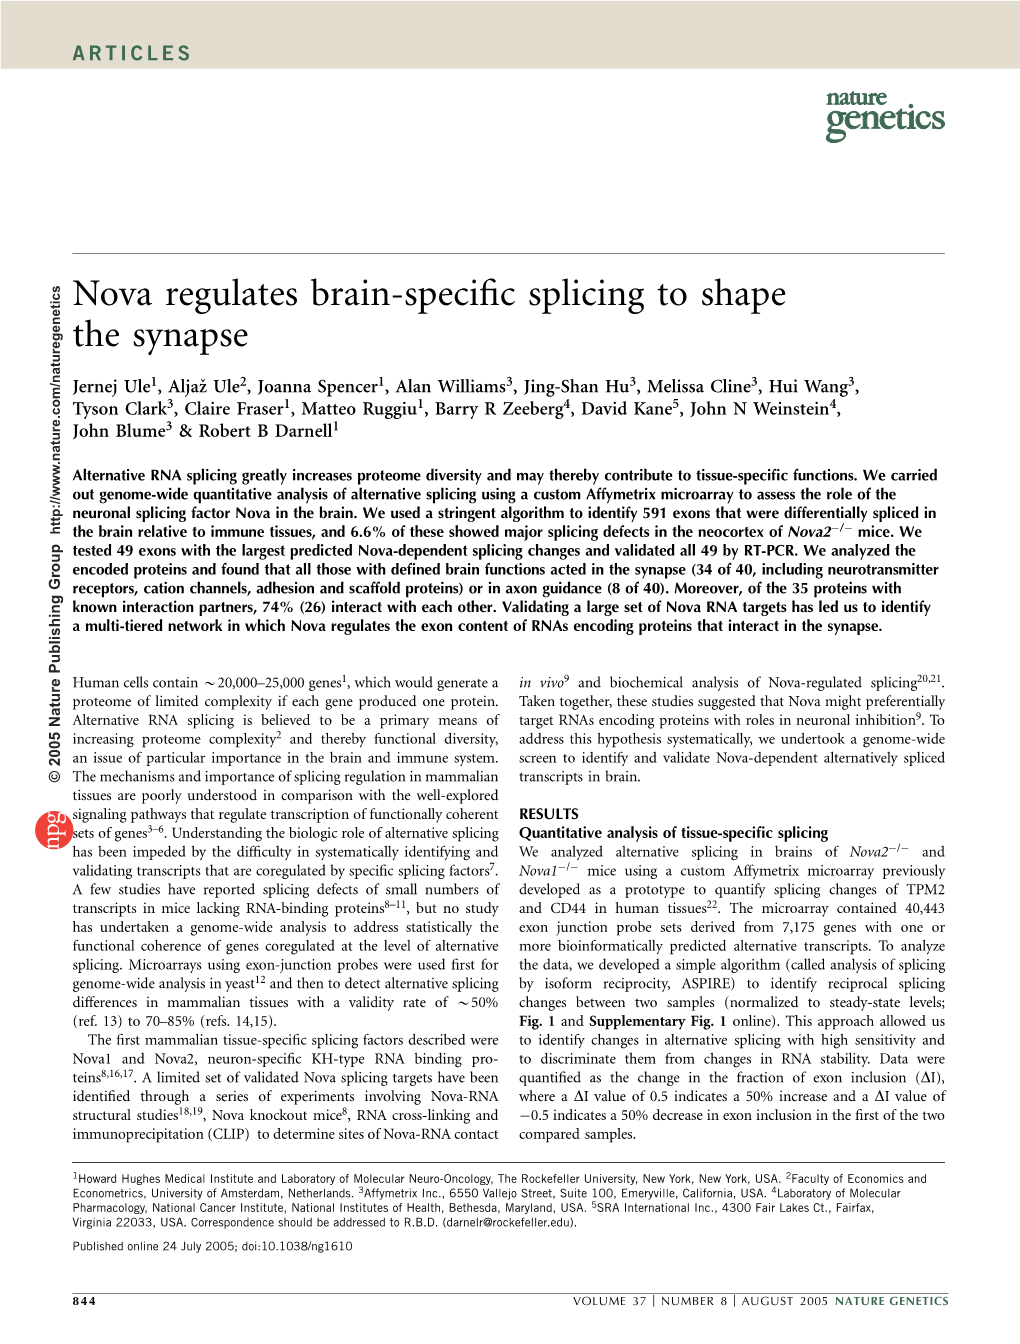 Nova Regulates Brain-Specific Splicing to Shape the Synapse